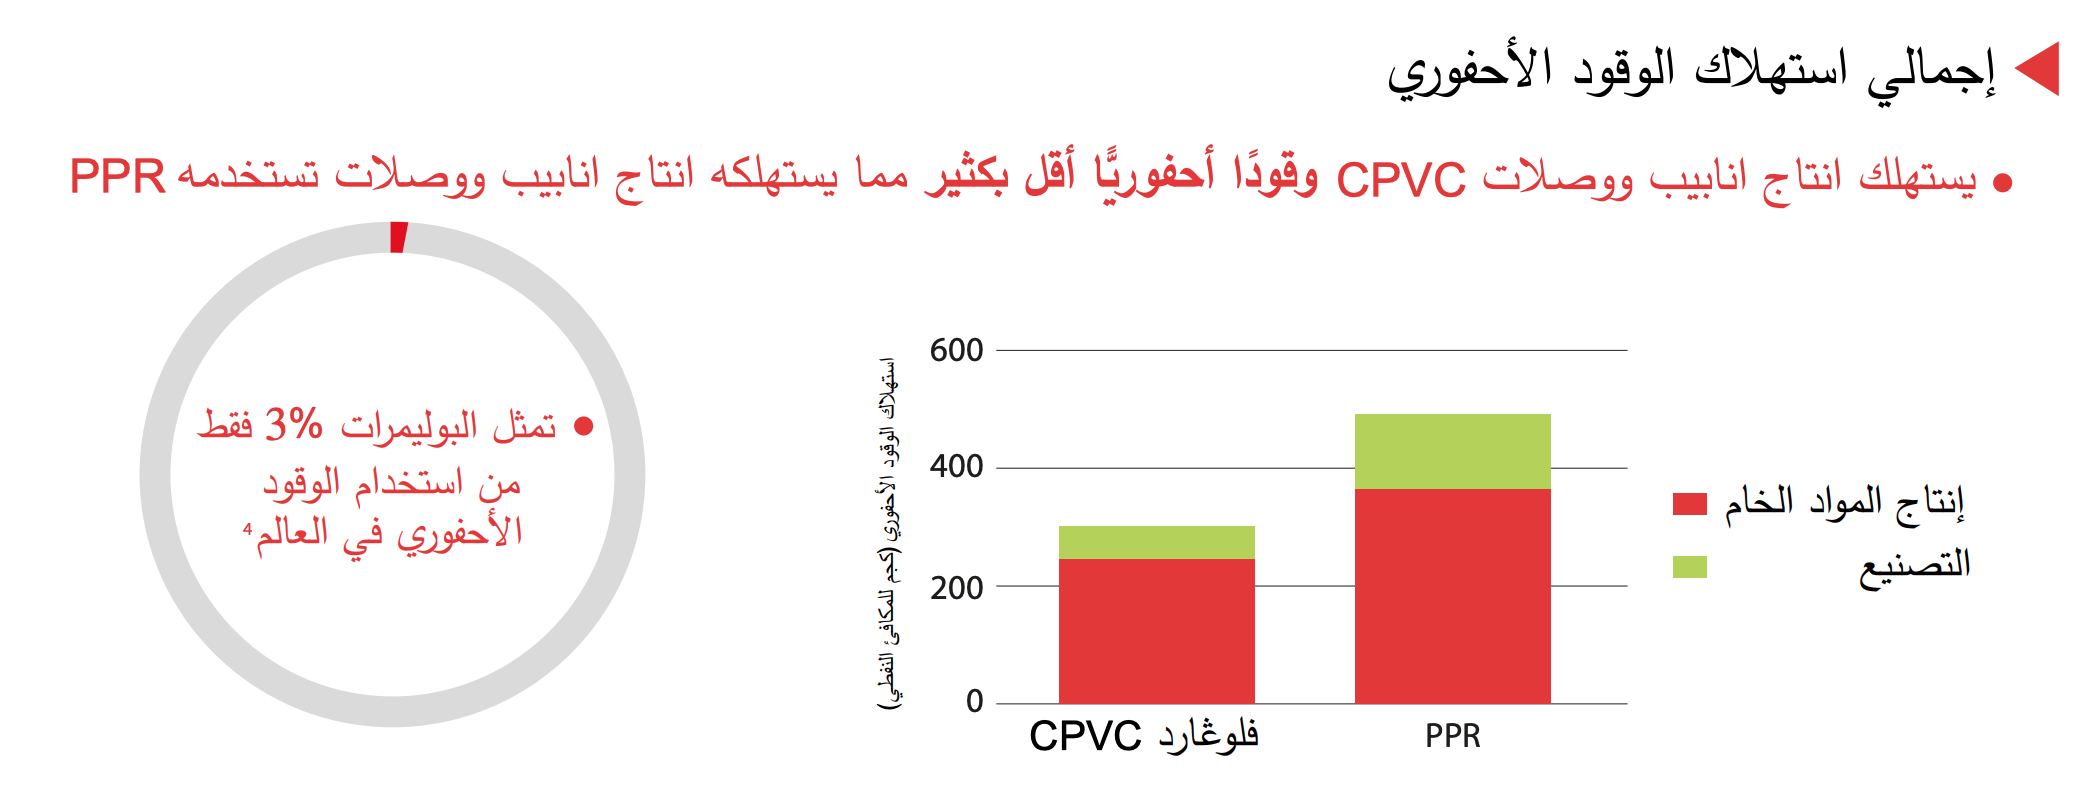 cpvc energy efficient infographic (arabic)